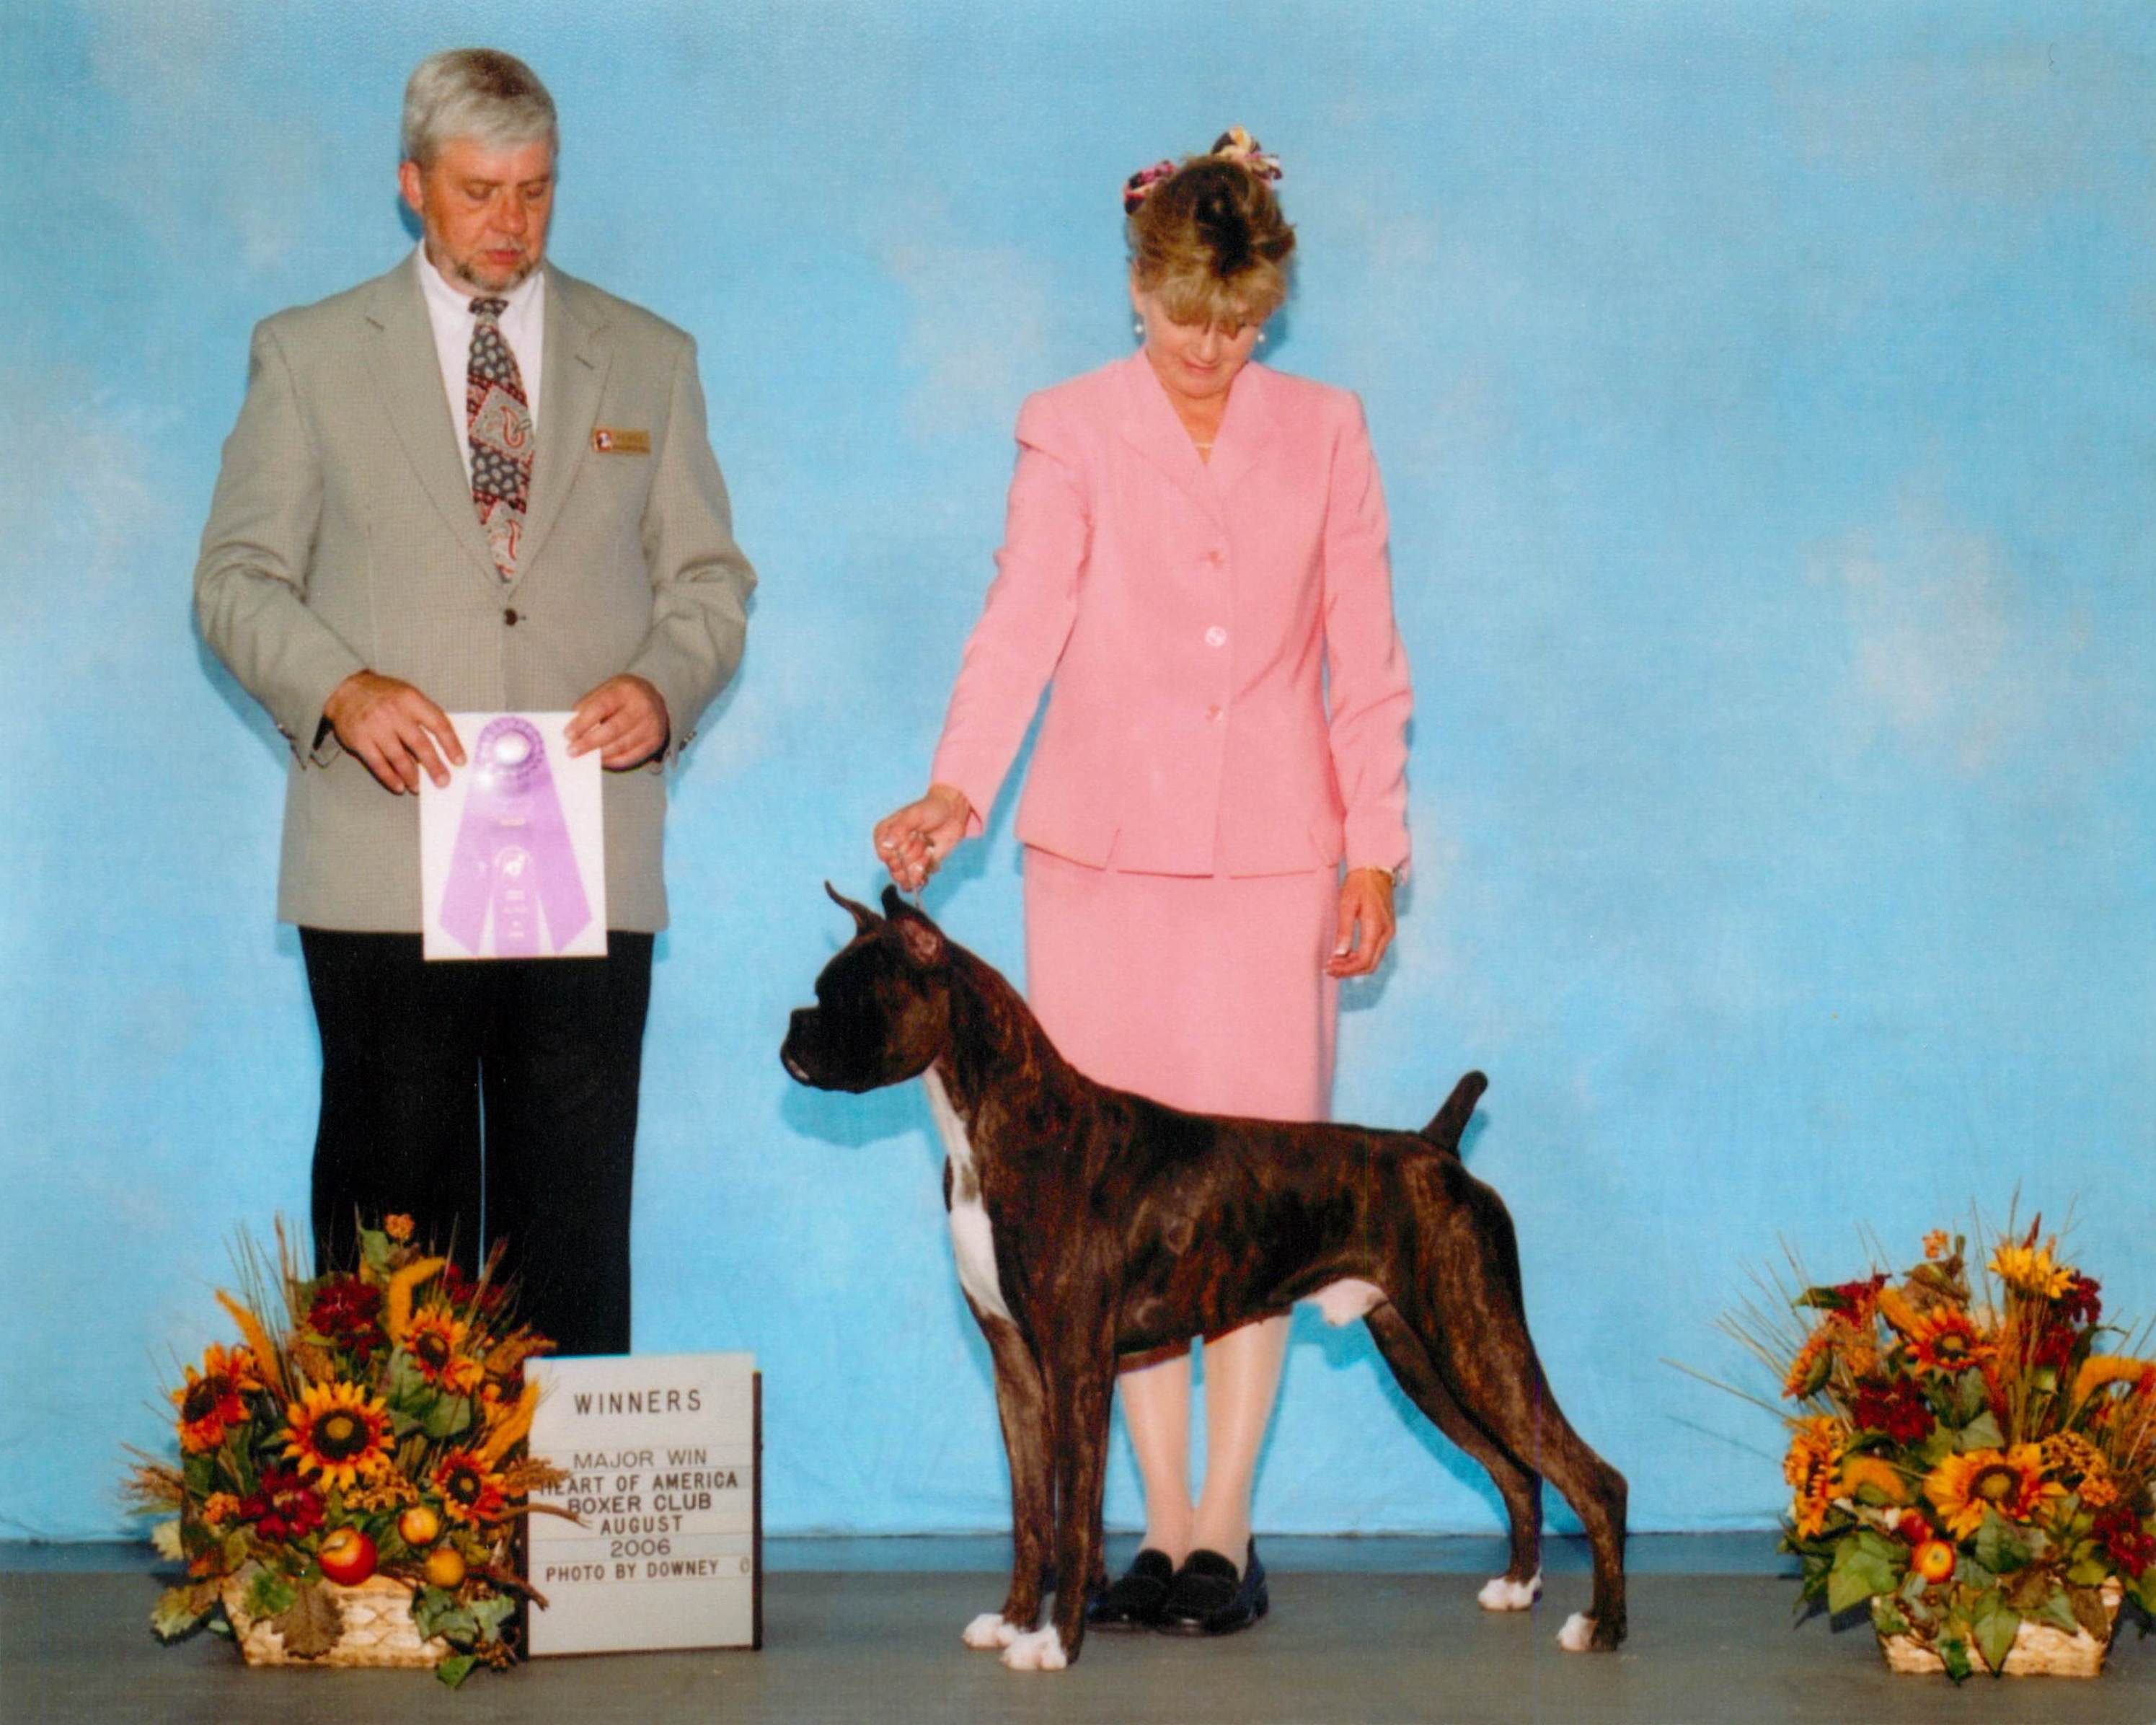 Winners Dog @ 2006 Specialty Show #1